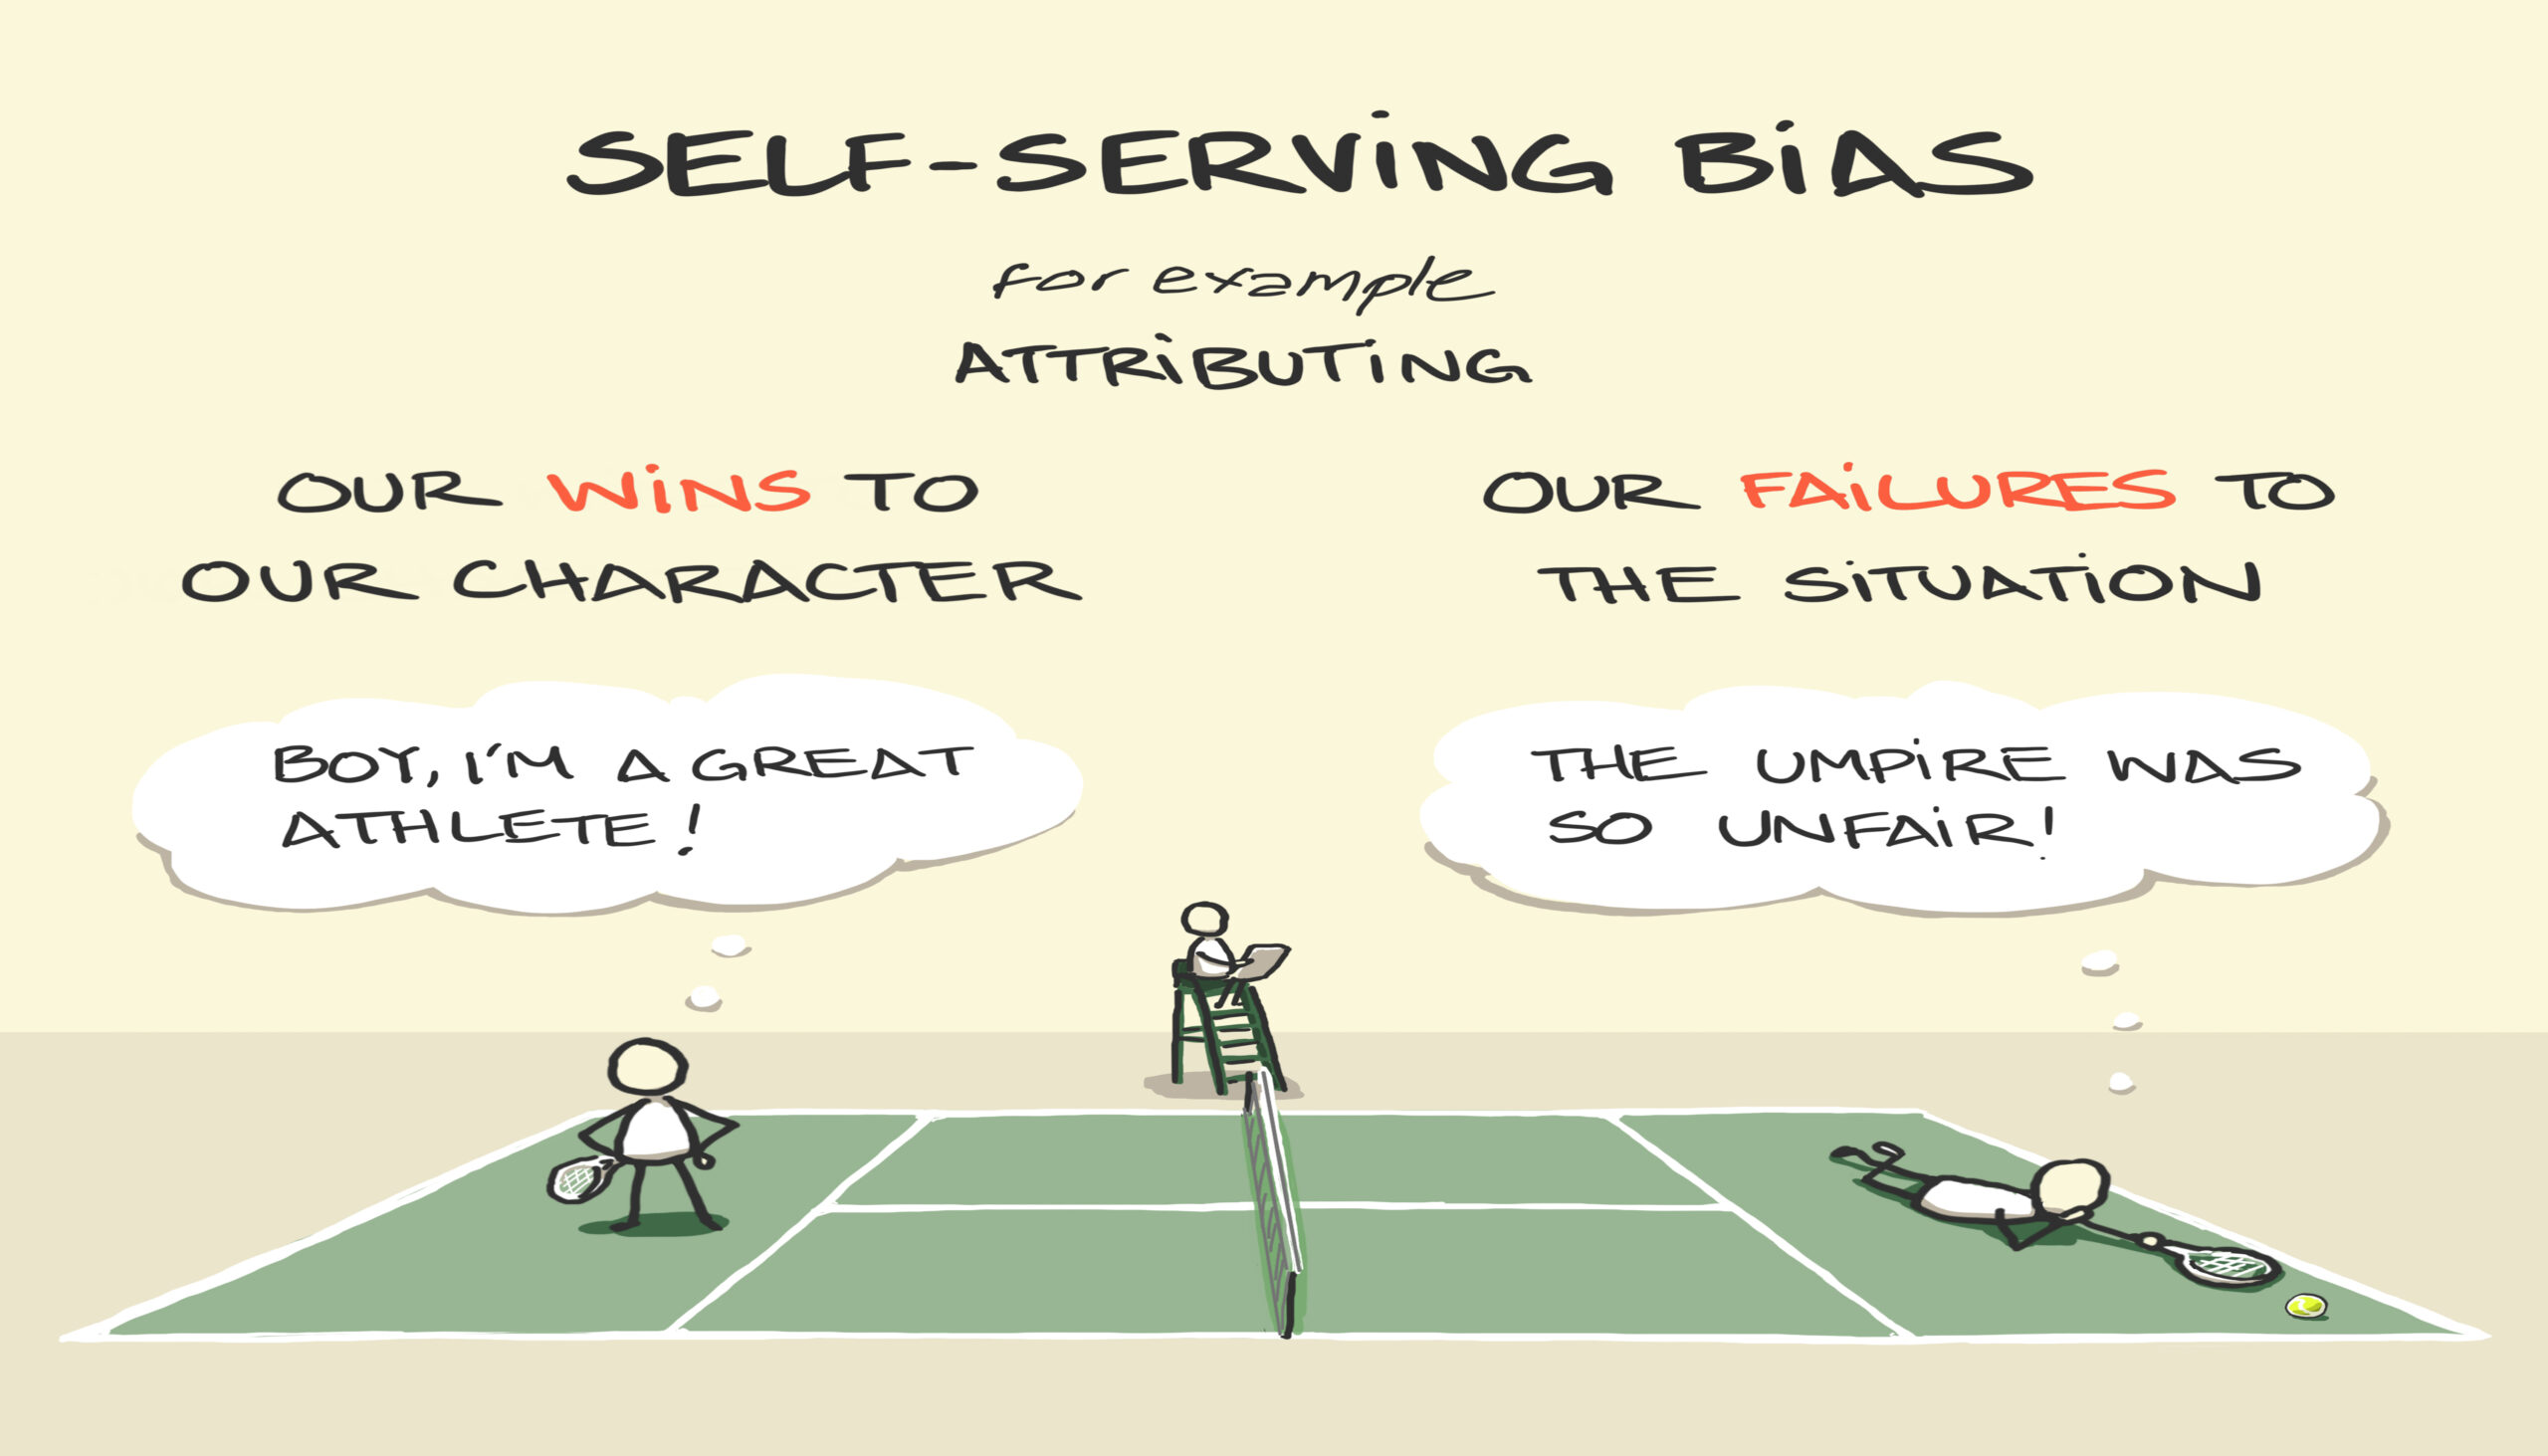 Self-Serving Bias illustrations